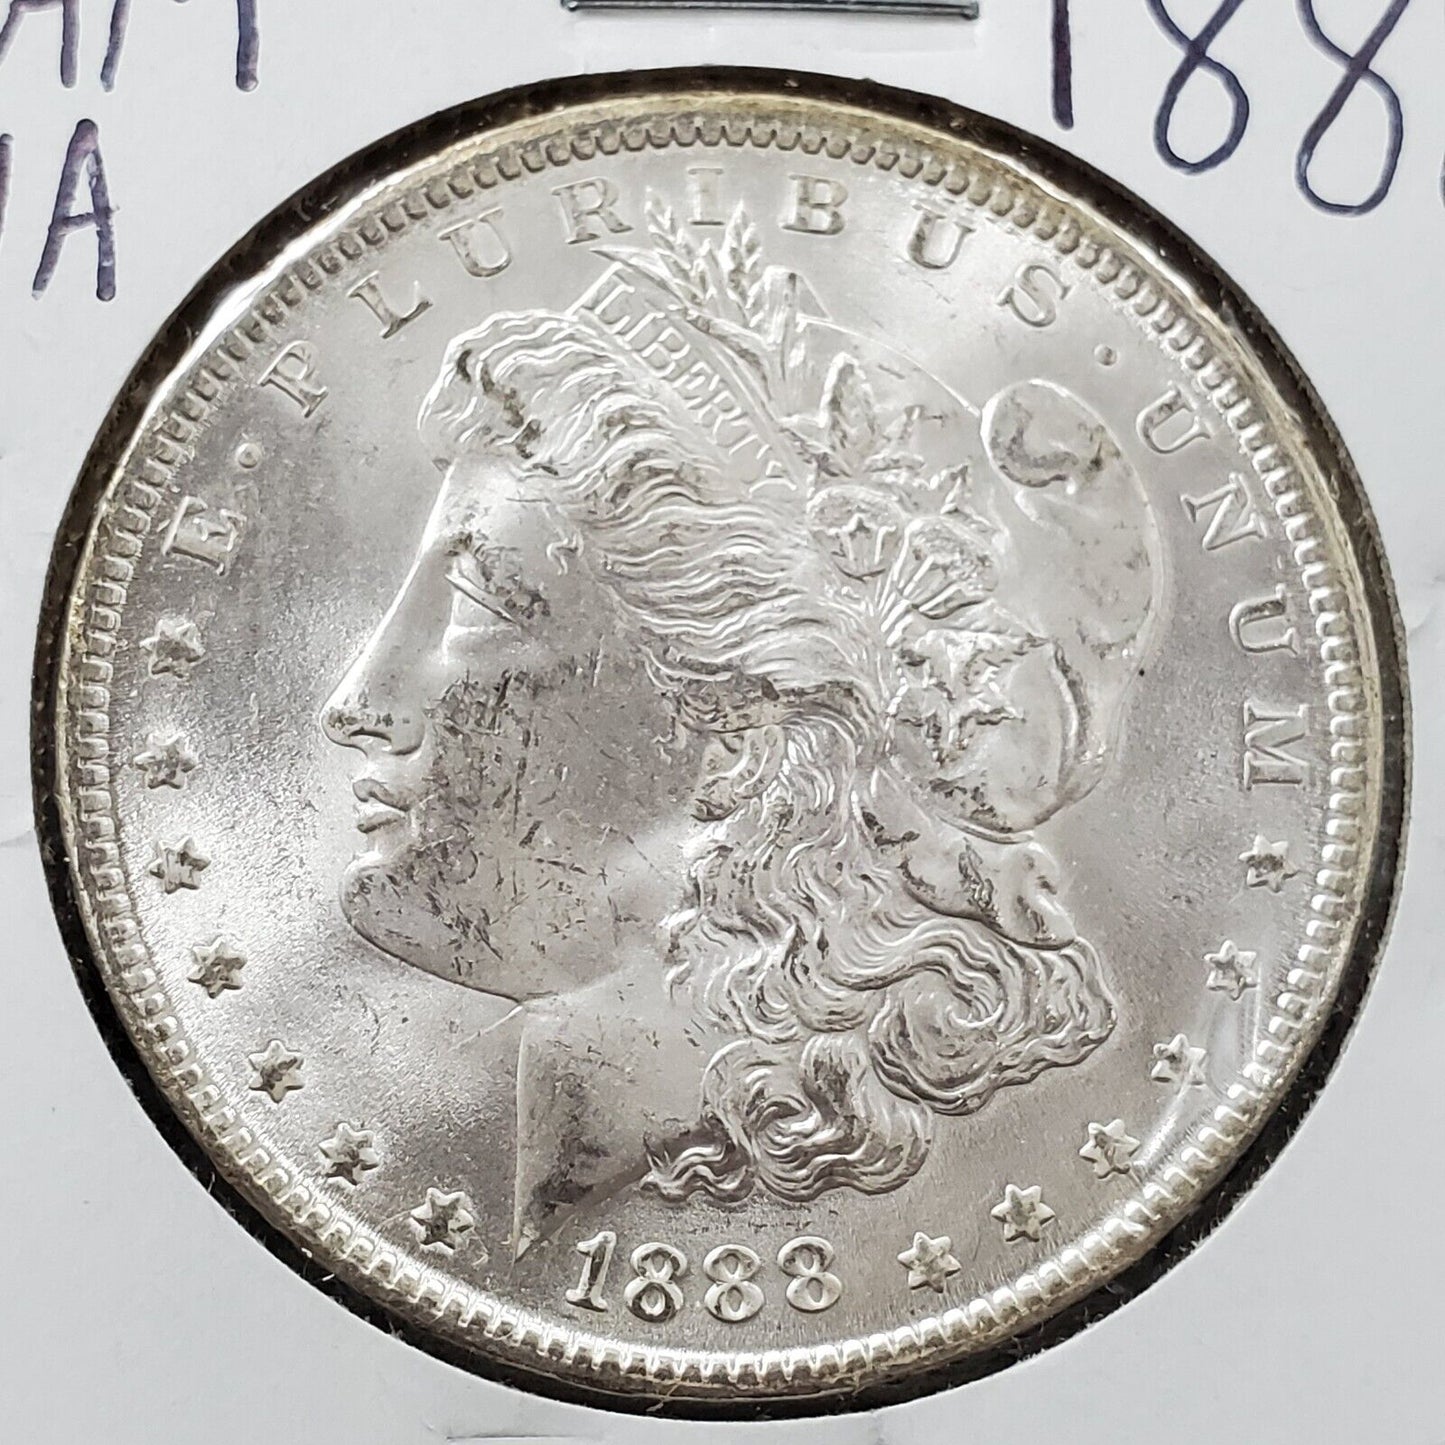 1888 P $1 Morgan Silver Eagle Dollar Coin Choice / GEM BU UNC Vam-11A Variety